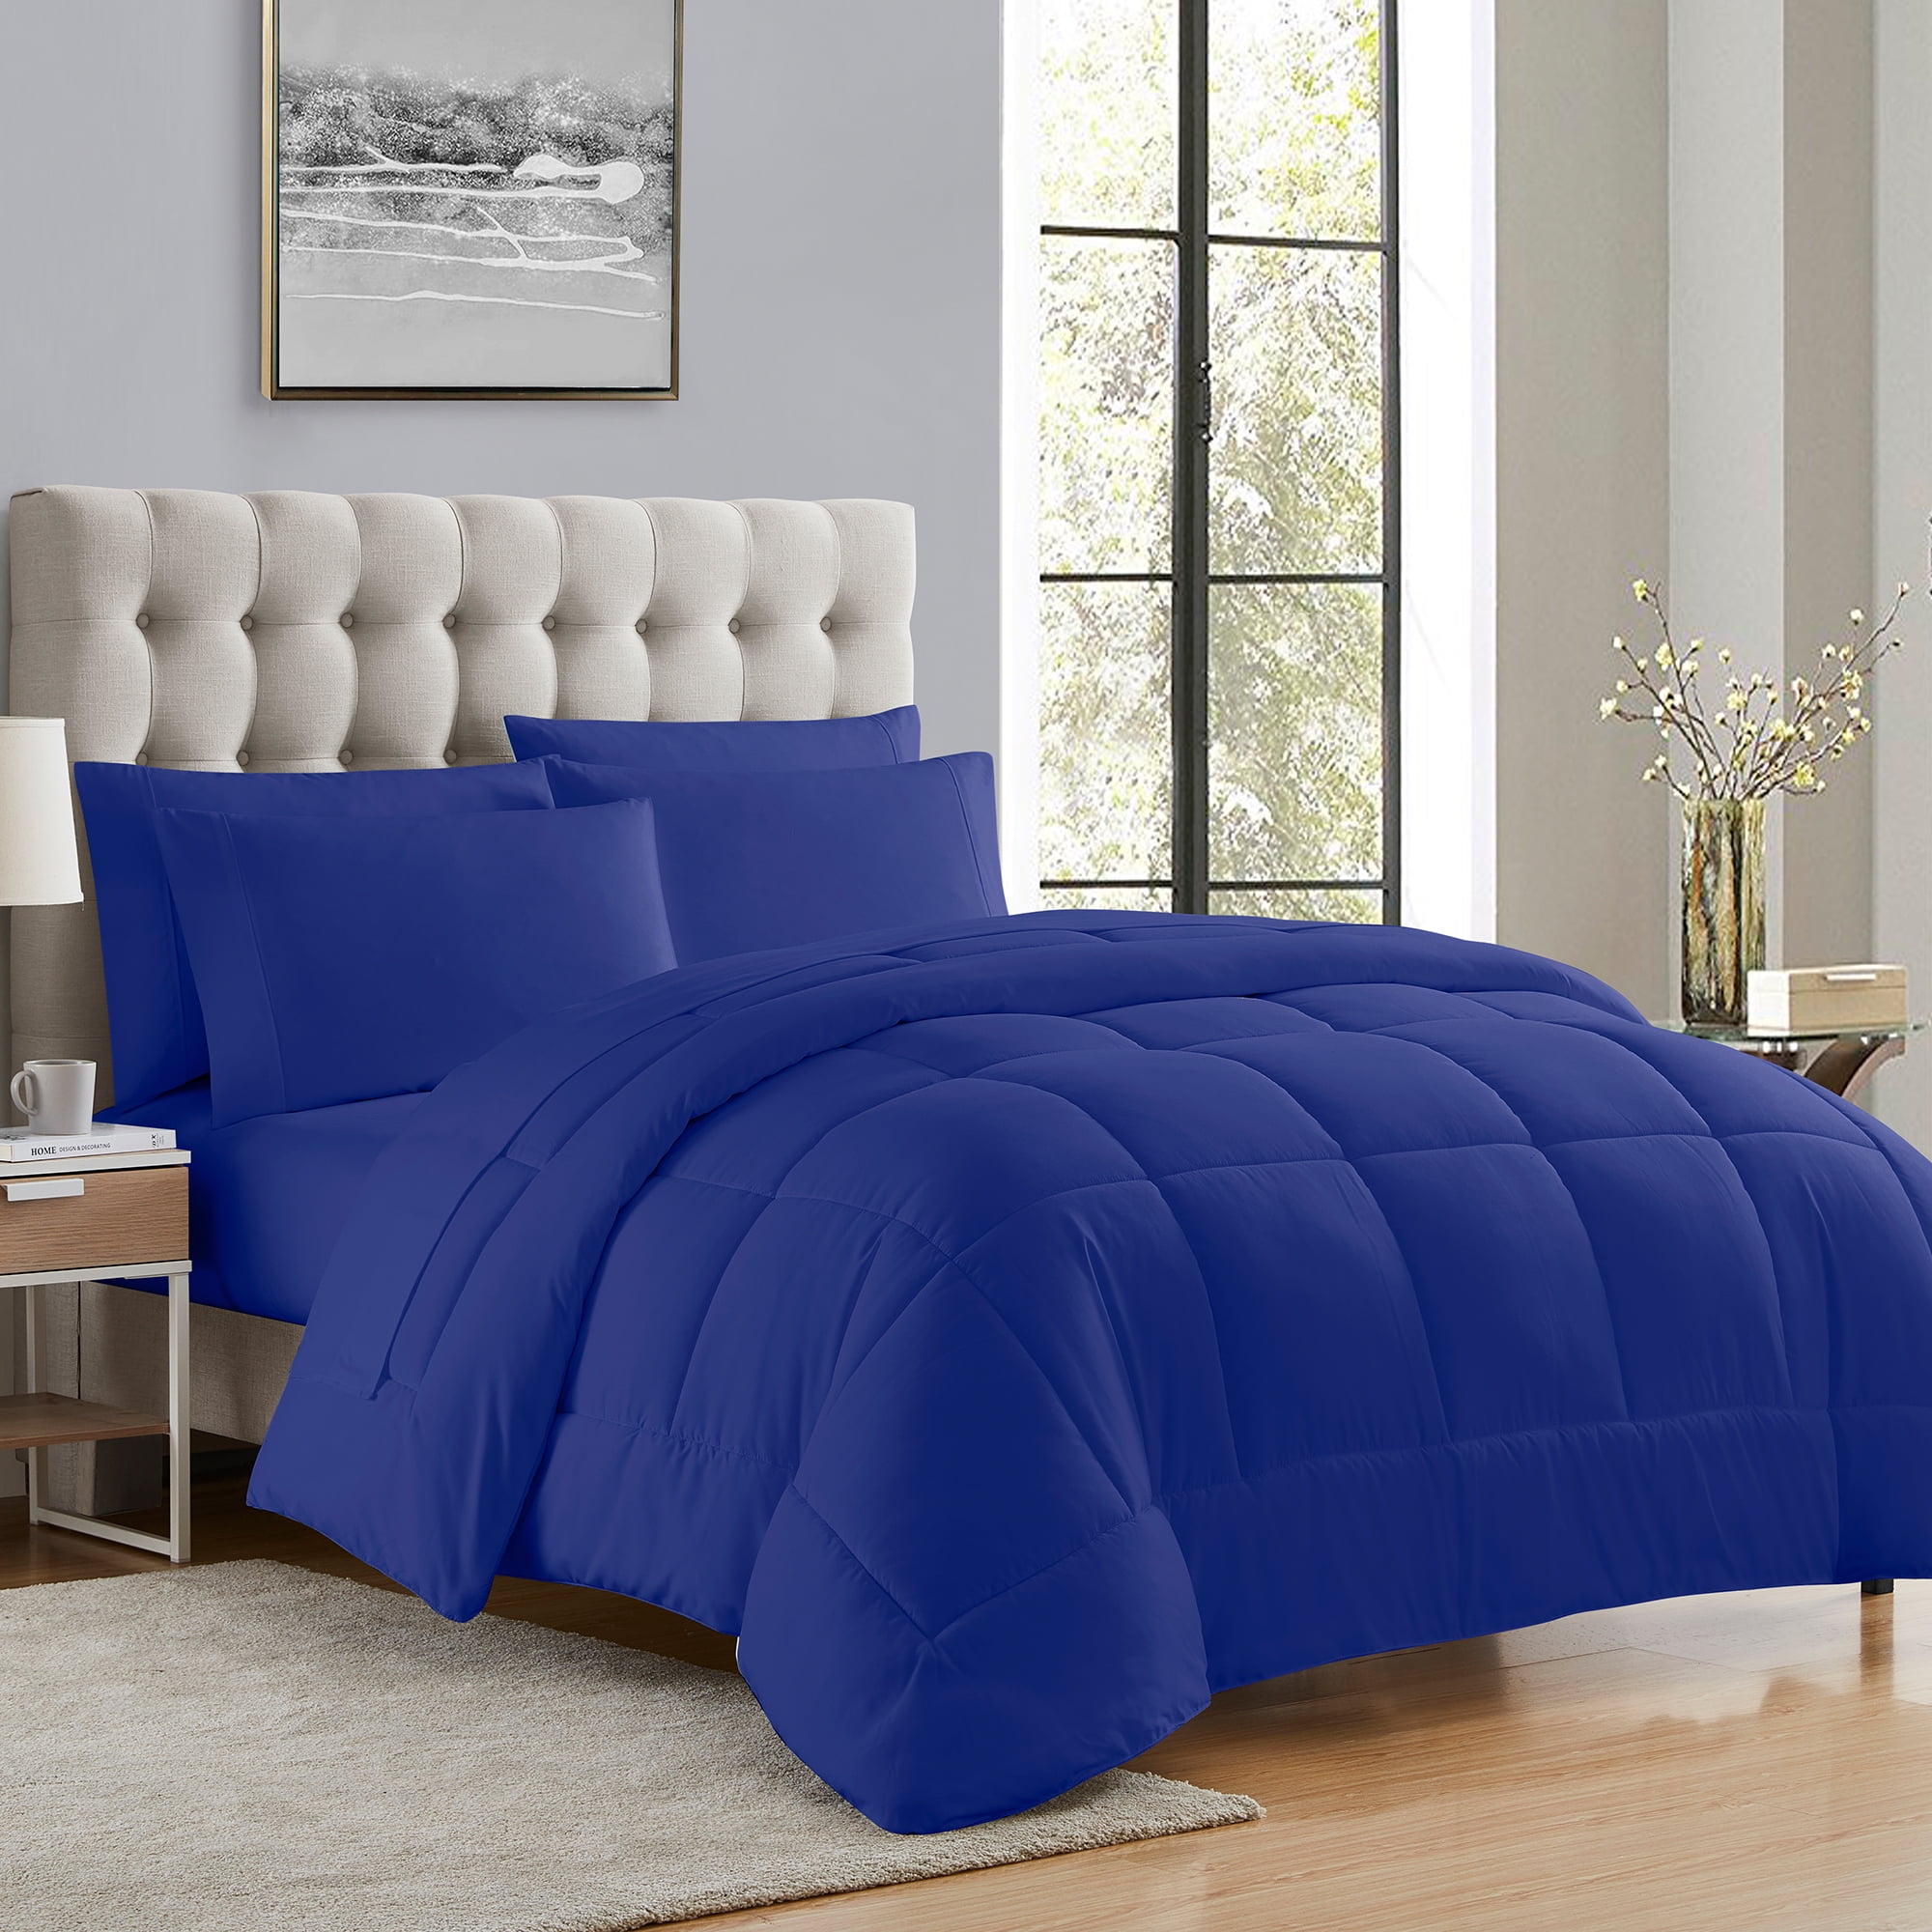 Luxury Royal Blue 5-piece Bed in a Bag Down Alternative Comforter Set, Twin - Walmart.com